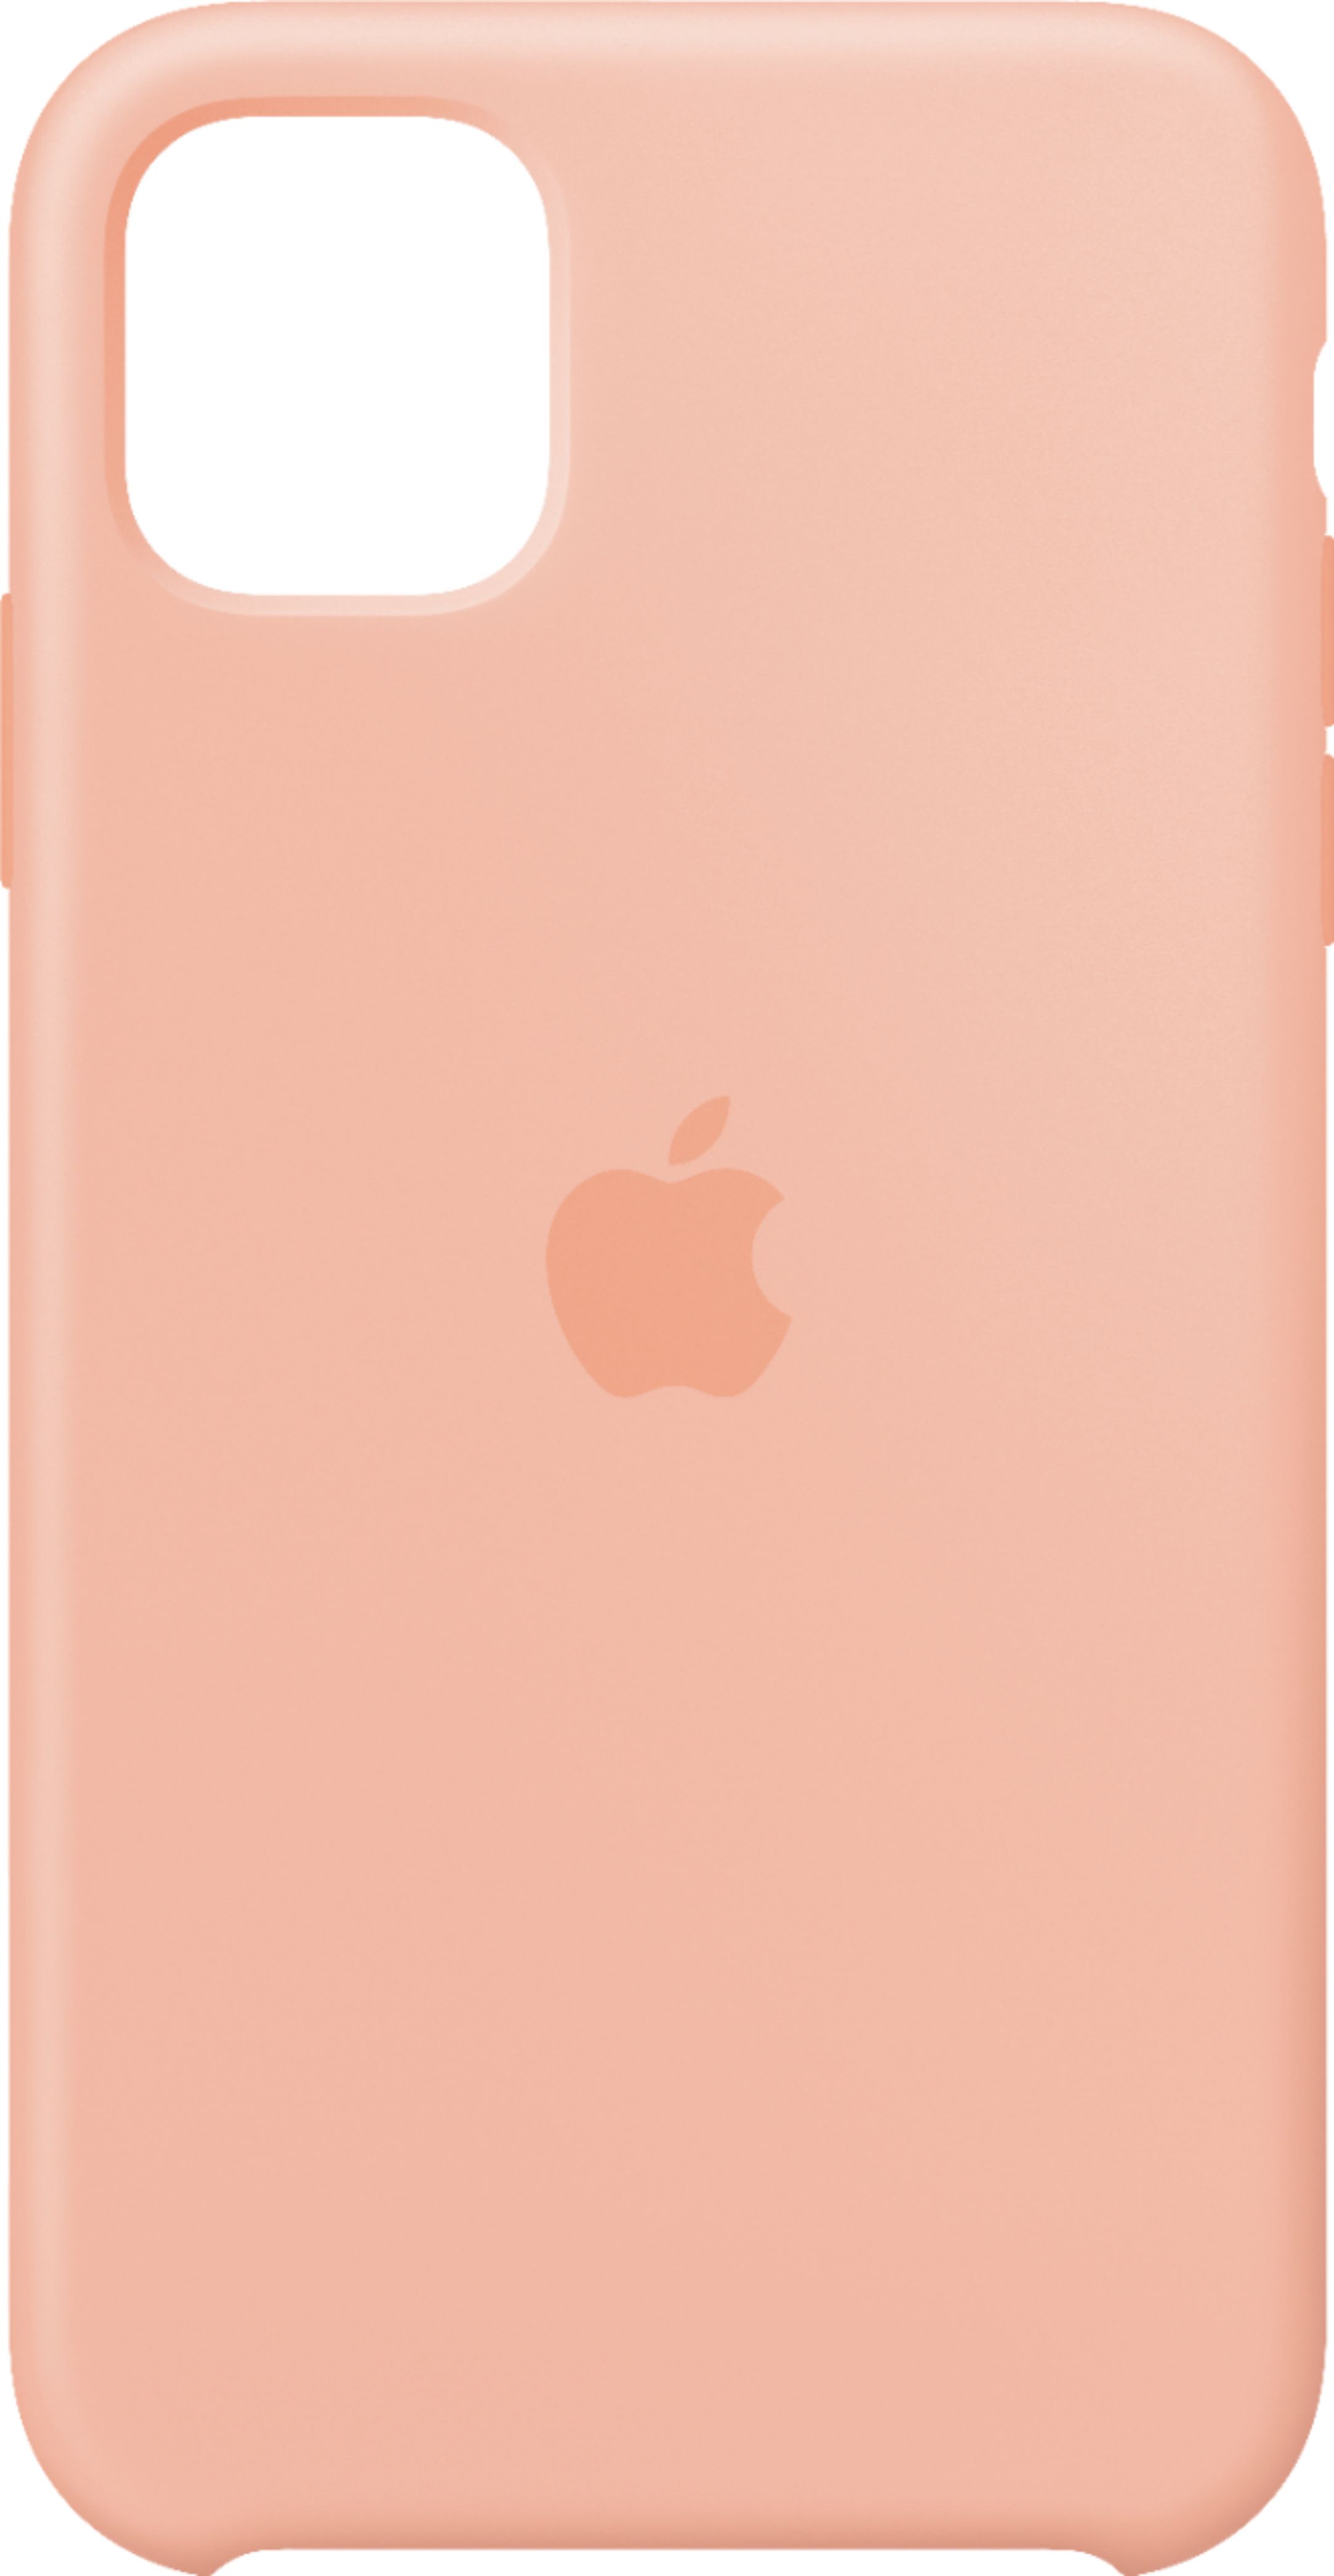 Apple iPhone 11 Silicone Case Grapefruit APPLE2020 ACCESSORY-34 Best Buy